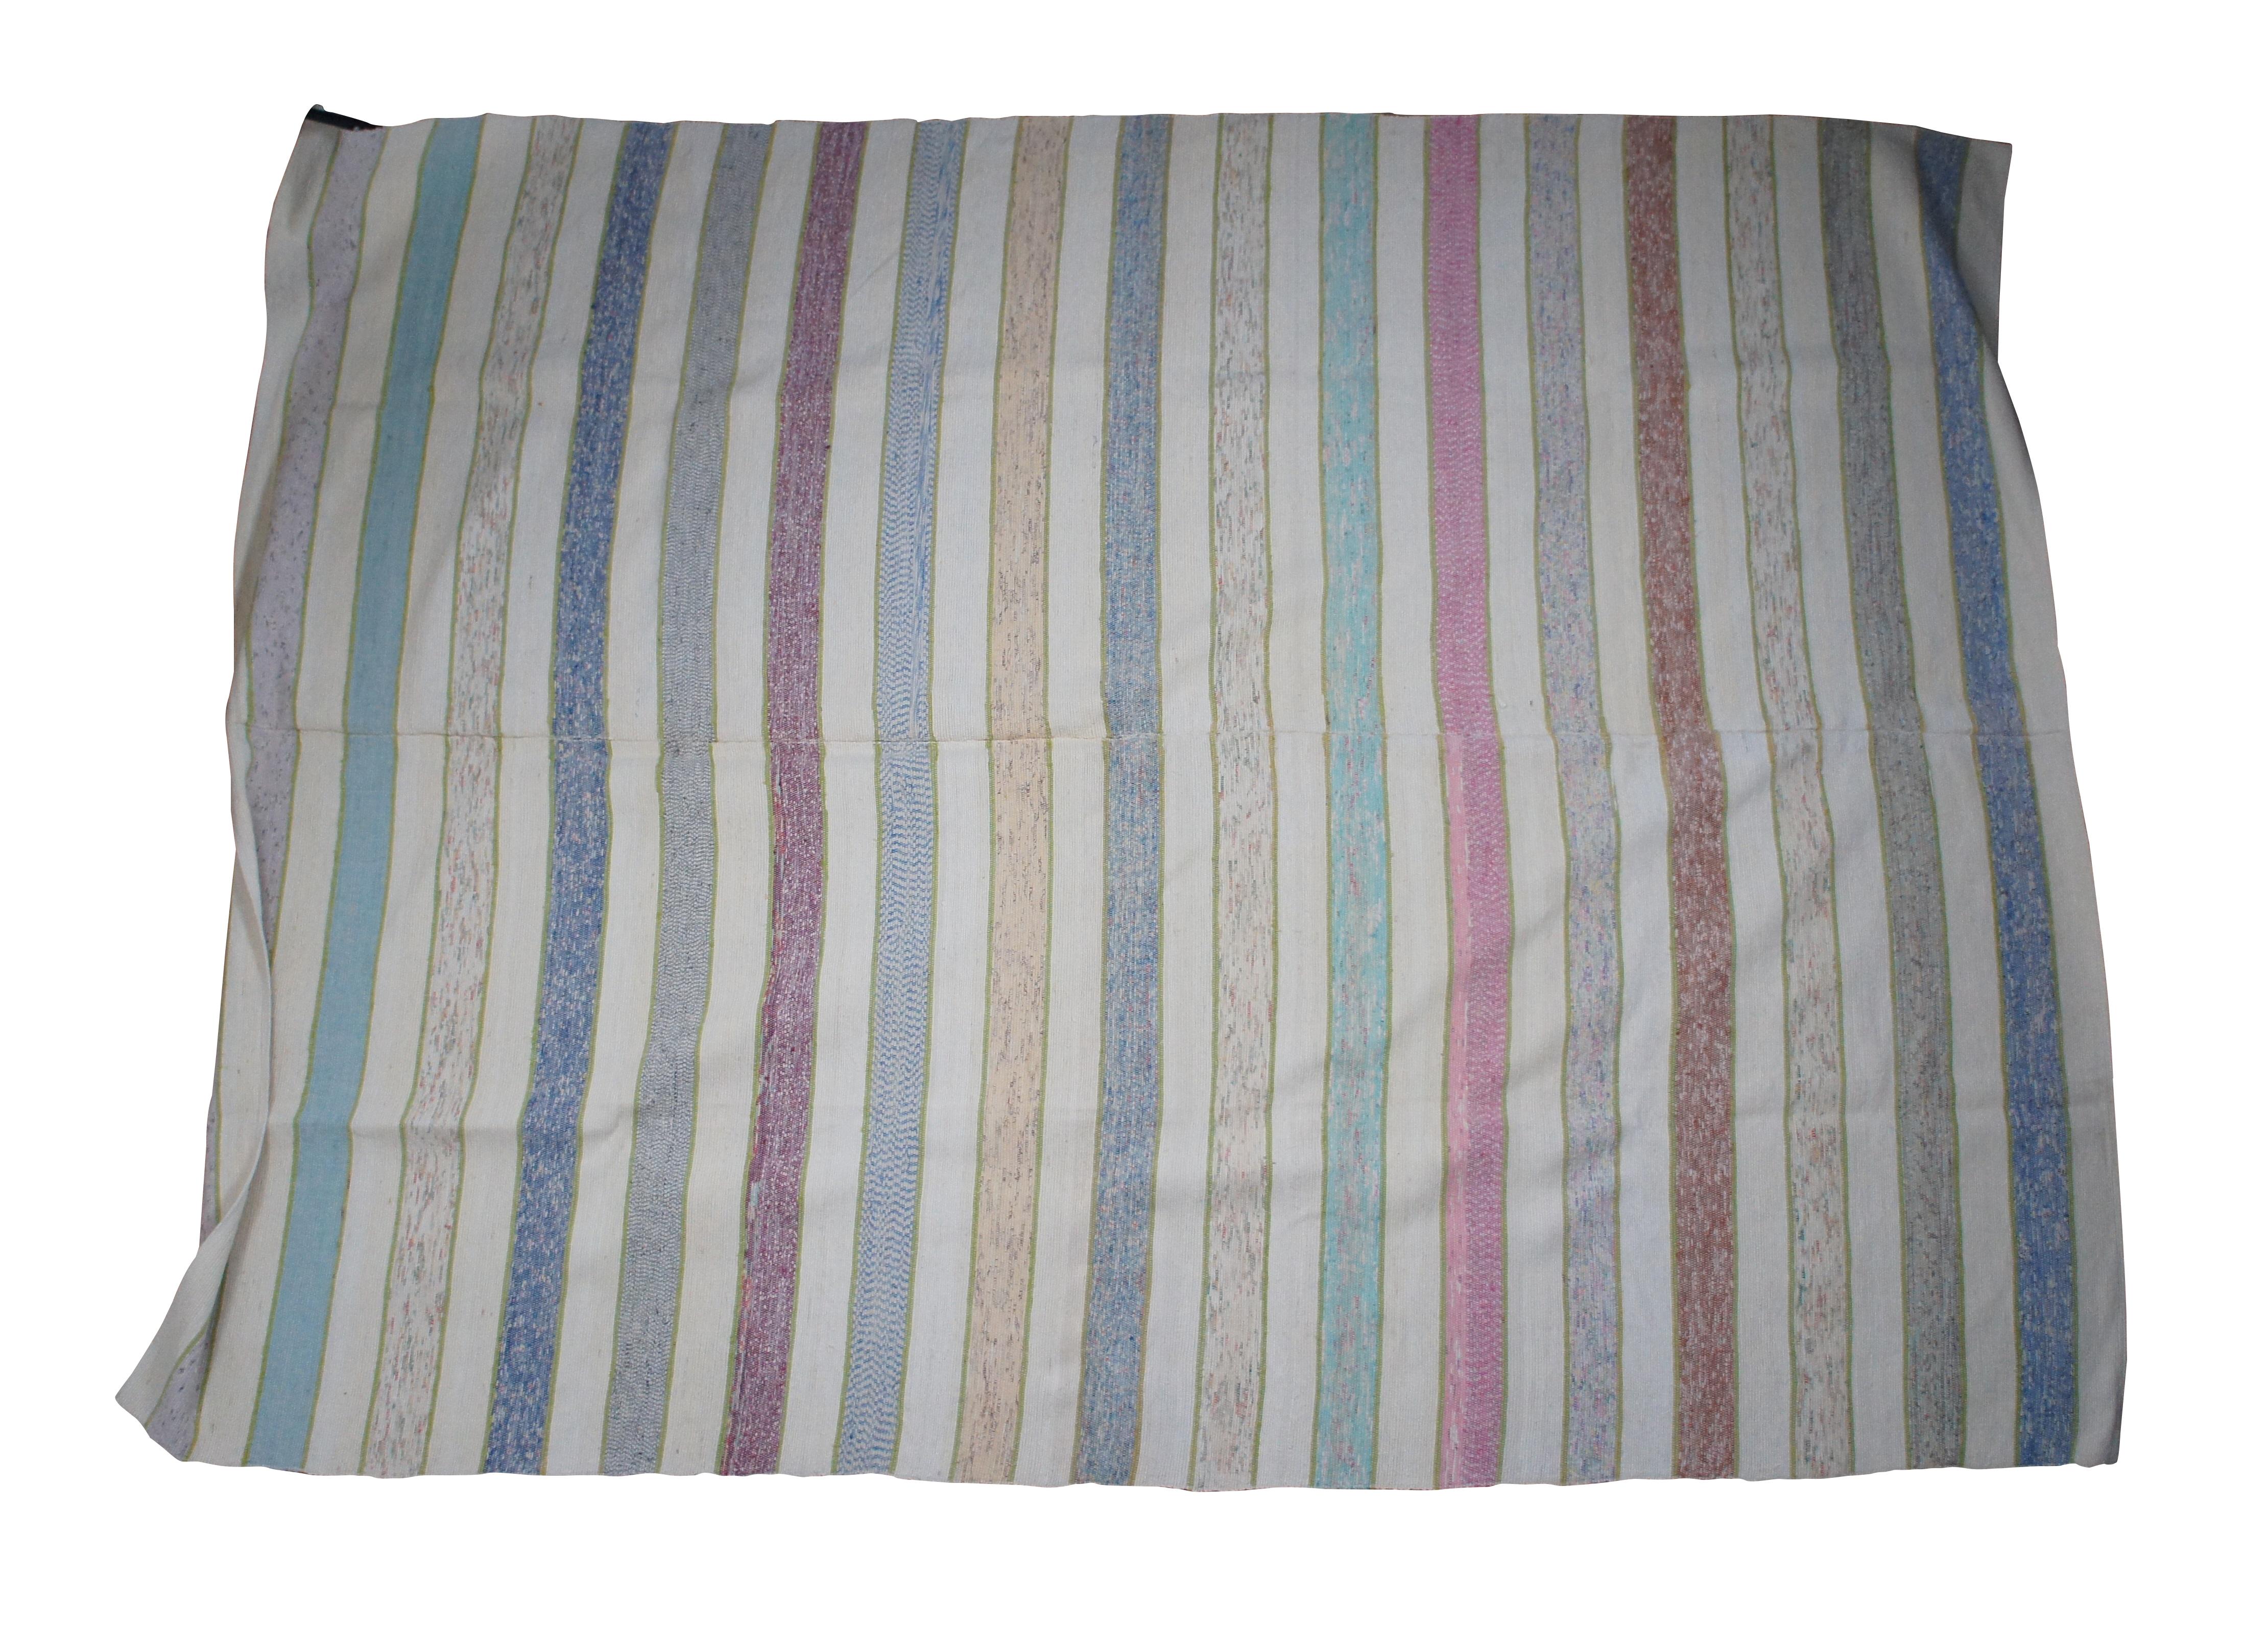 Folk Art 2 Vintage Colorful Hand Loomed Striped Cotton Rag Blankets Bedspread Rug Pair 